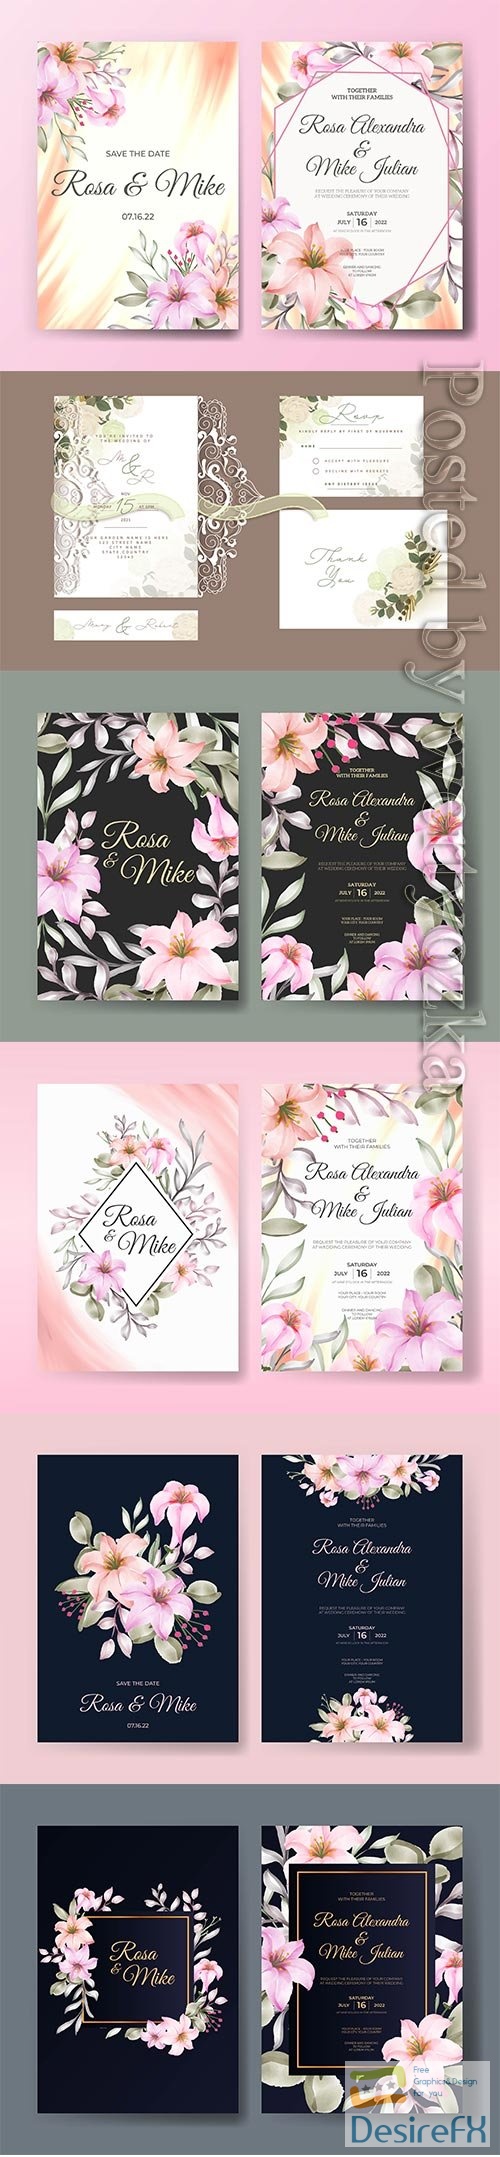 Wedding card set with beautiful design